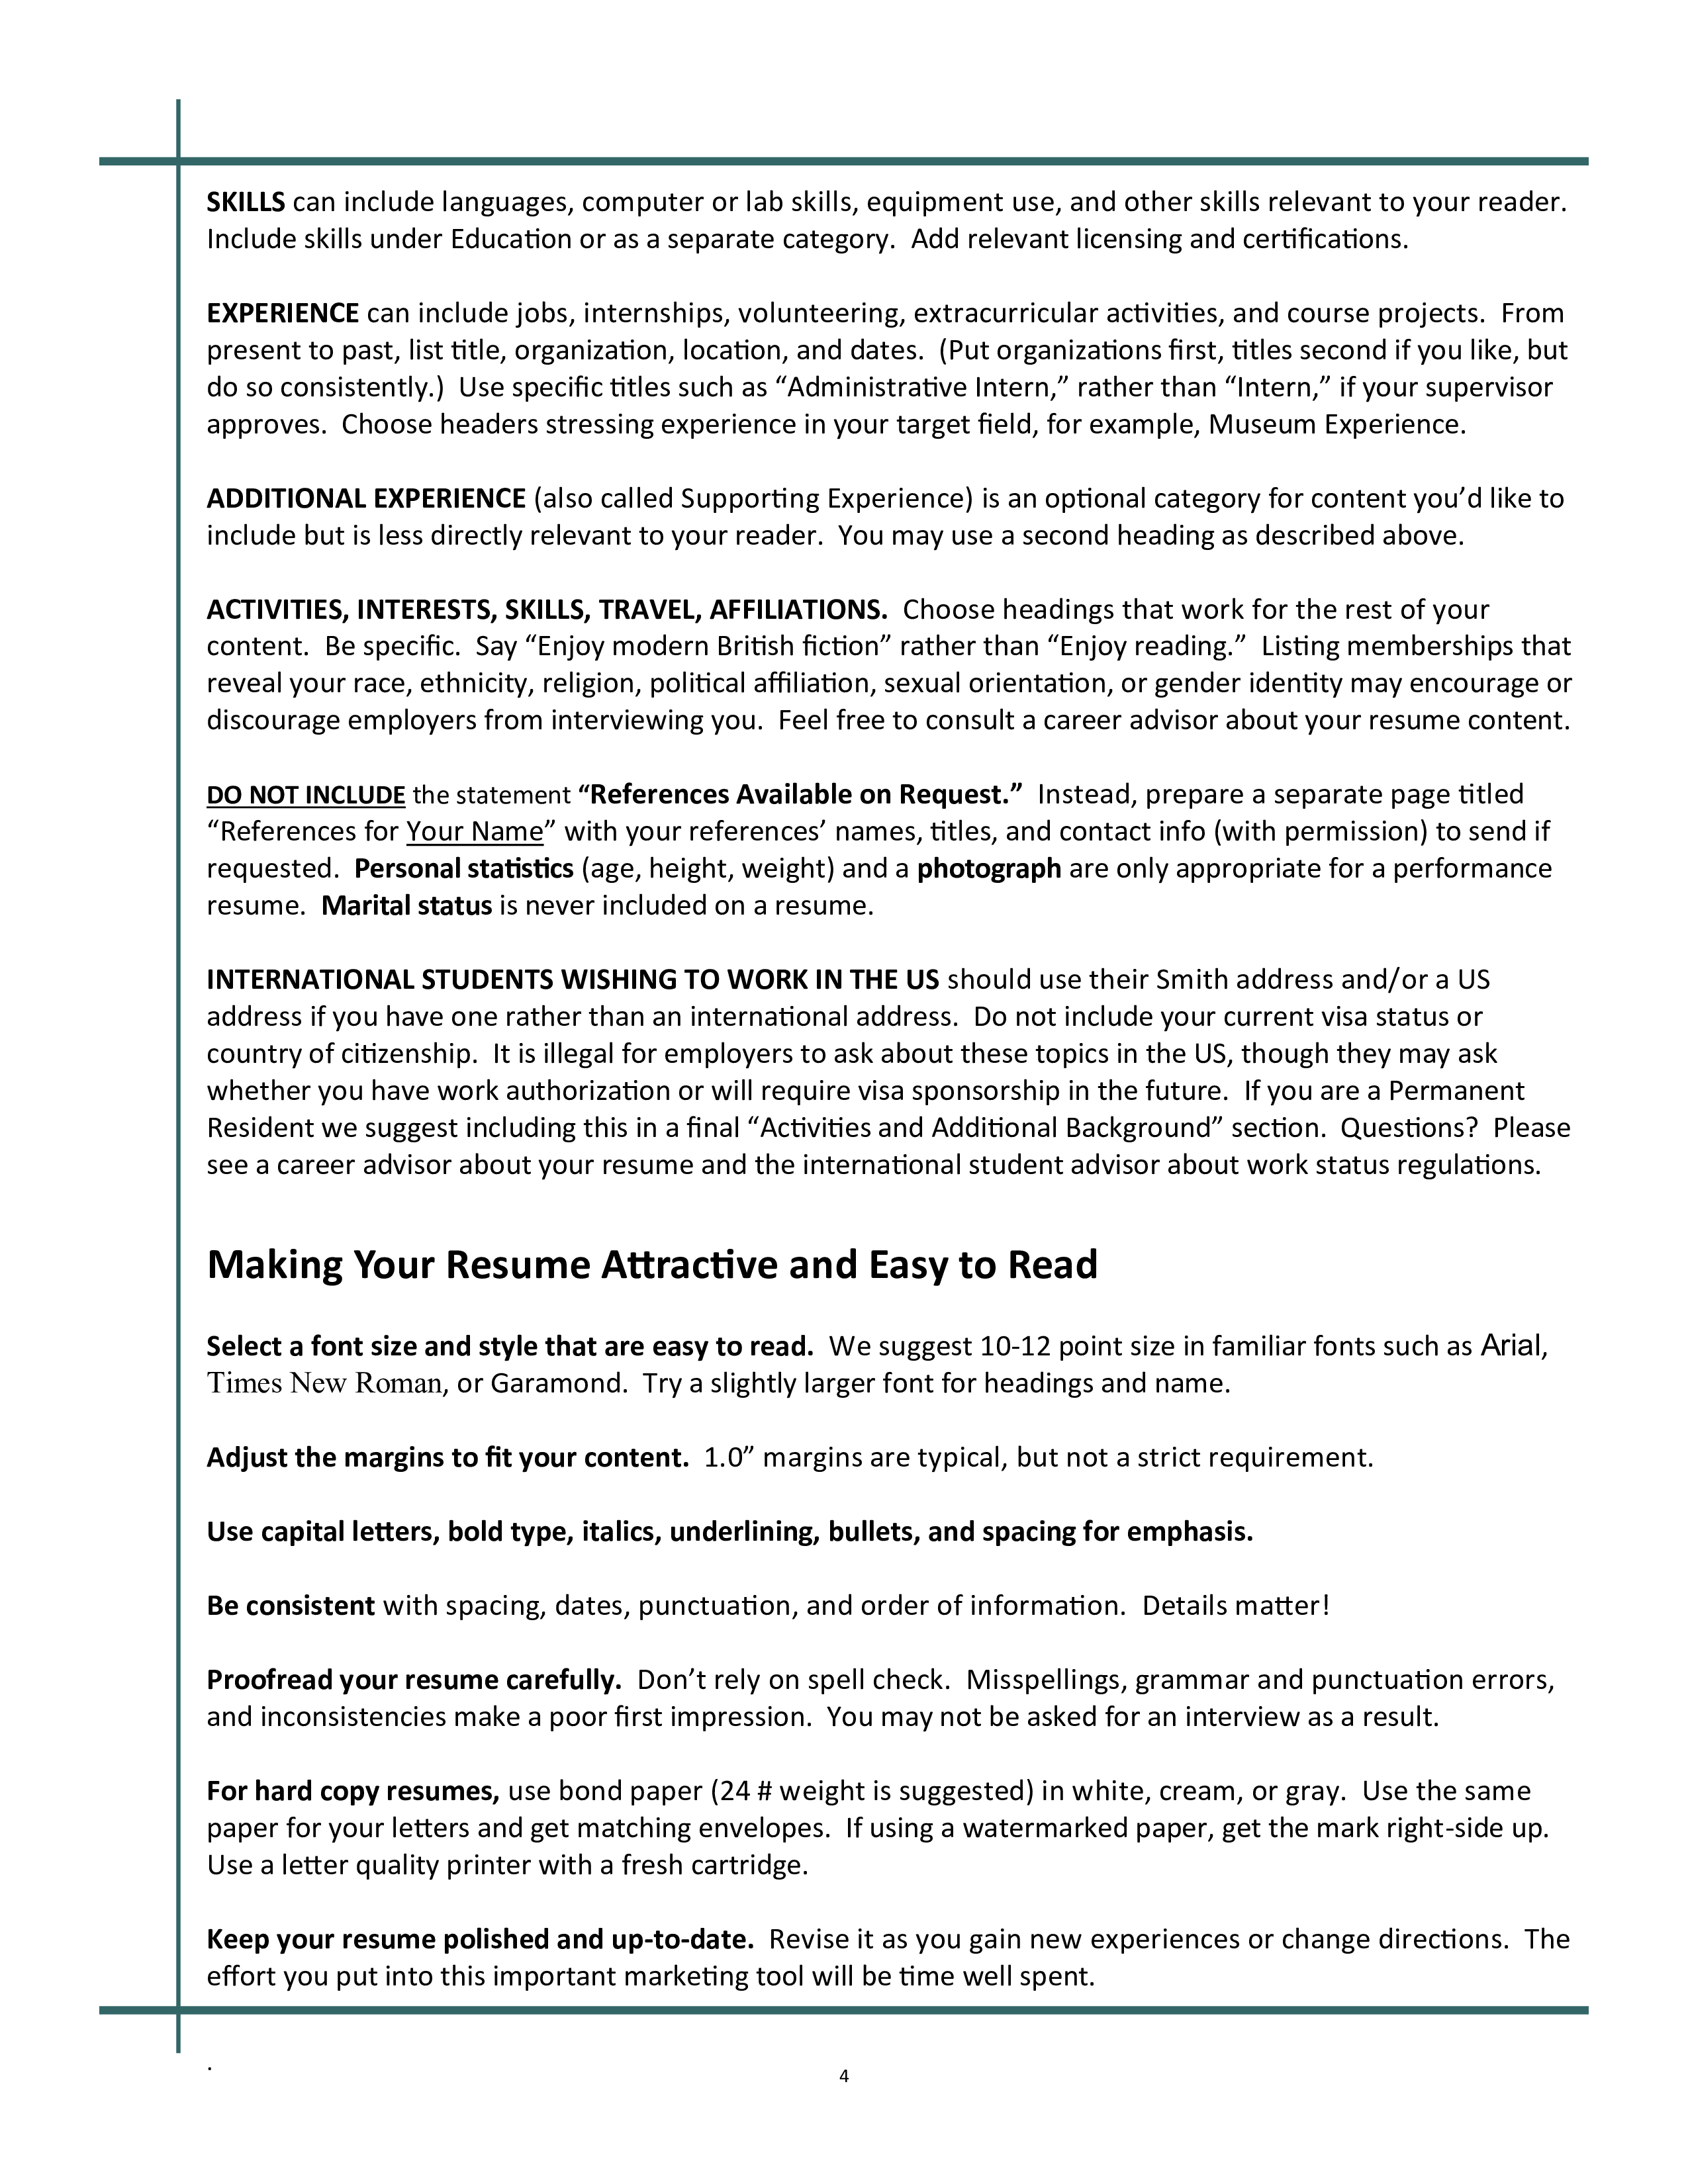 sample resume objective for marketing